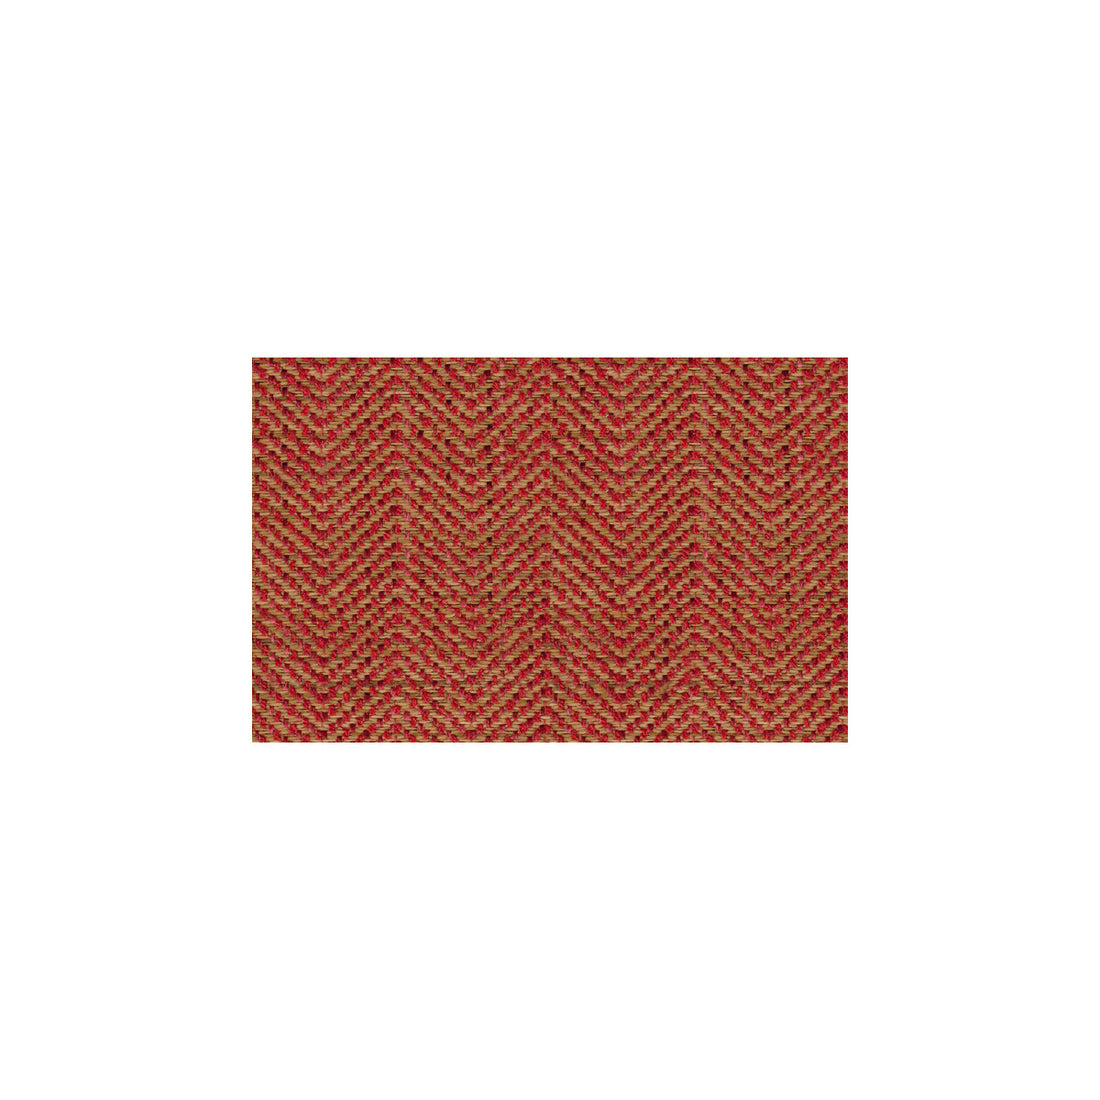 Kravet Smart fabric in 31748-419 color - pattern 31748.419.0 - by Kravet Smart